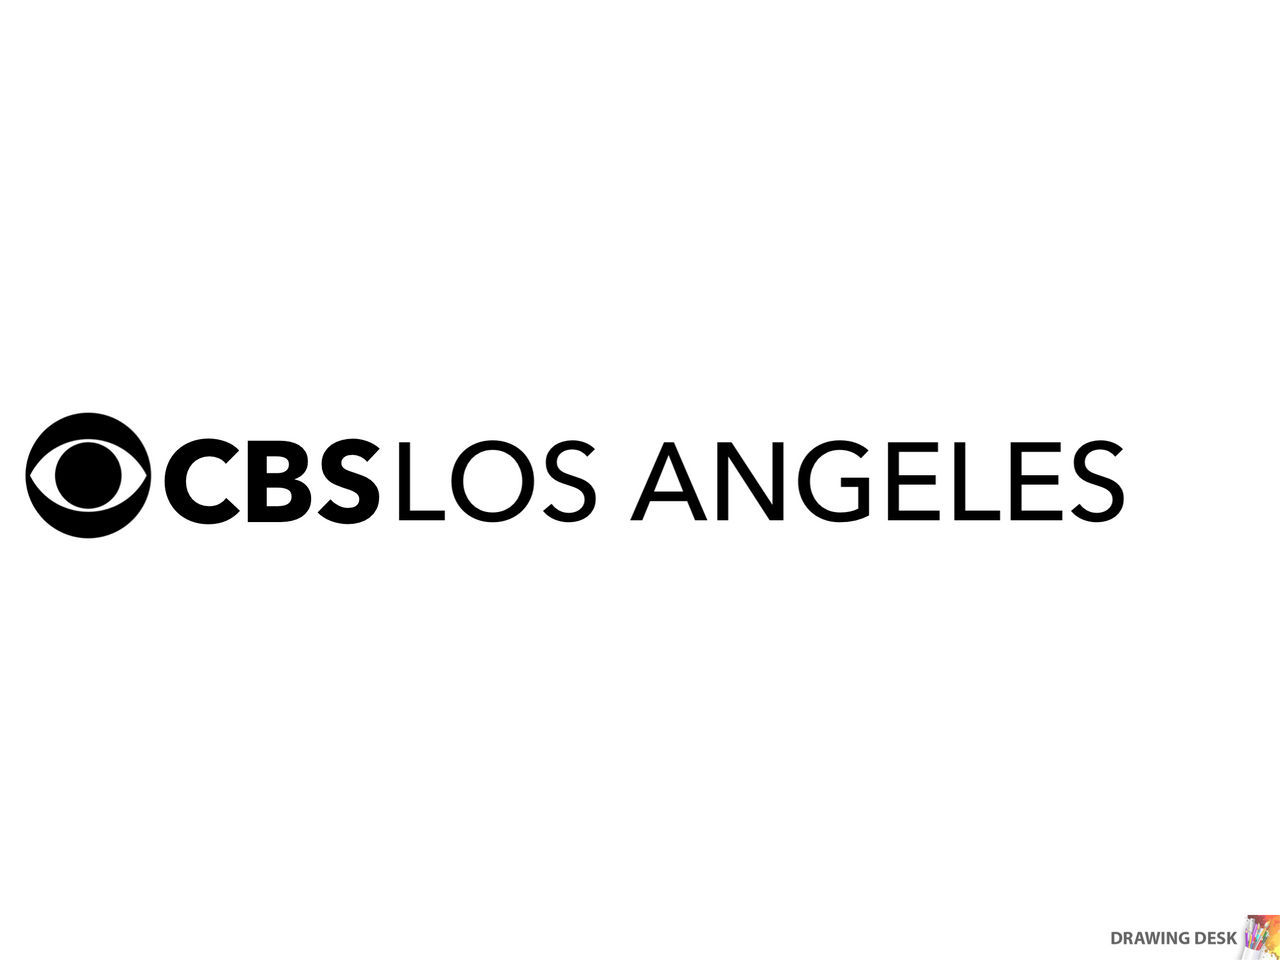 KCBS Logo by RGBMetro on DeviantArt